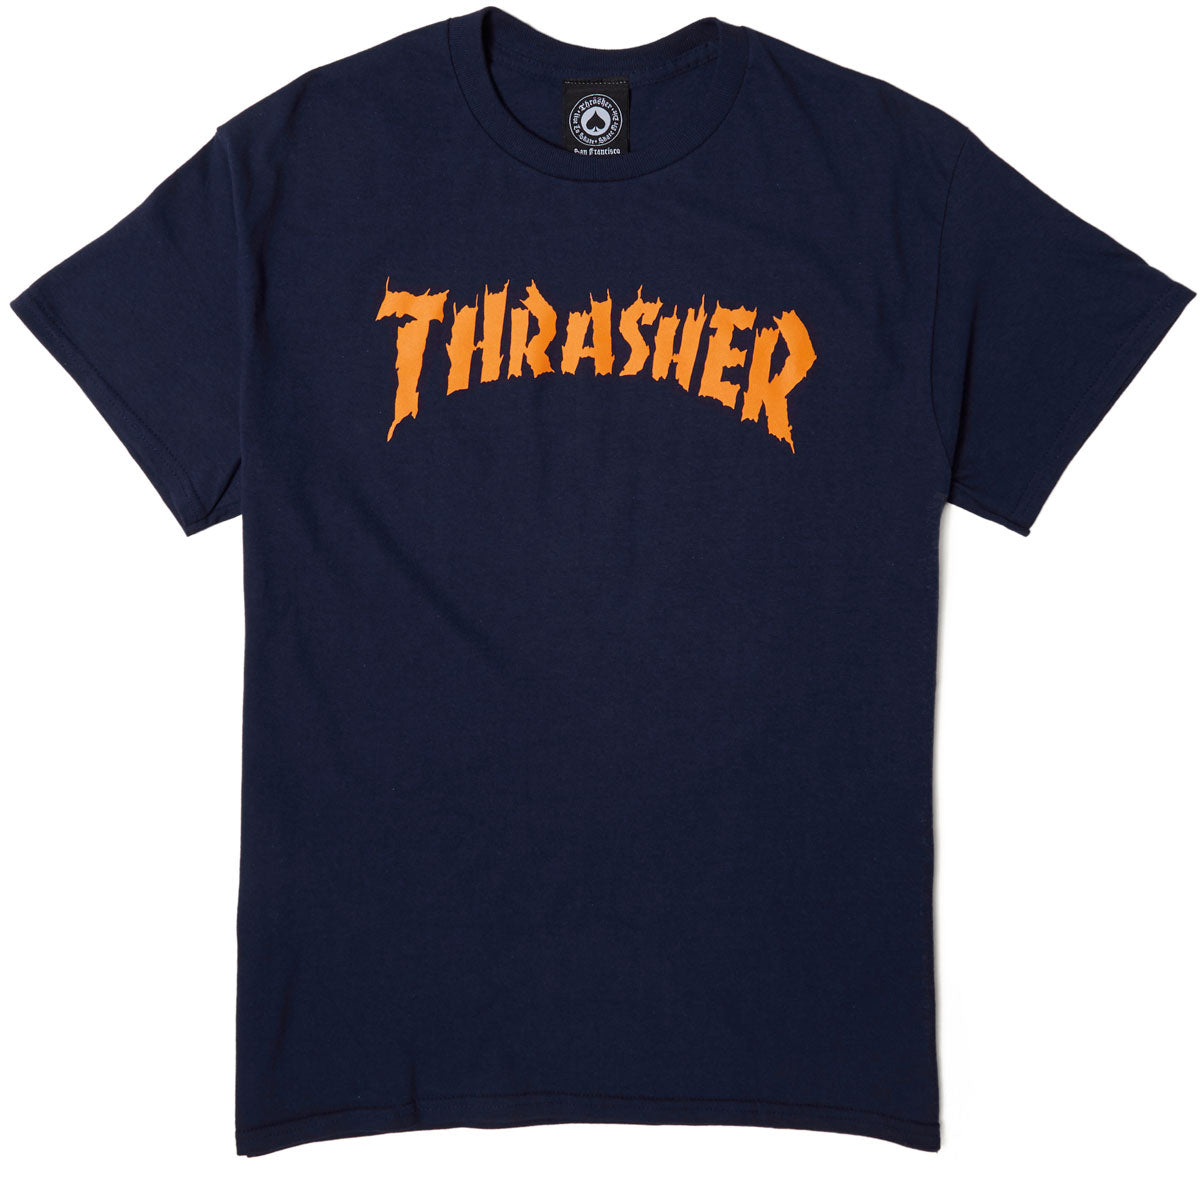 Thrasher Burn It Down T-Shirt - Navy image 2